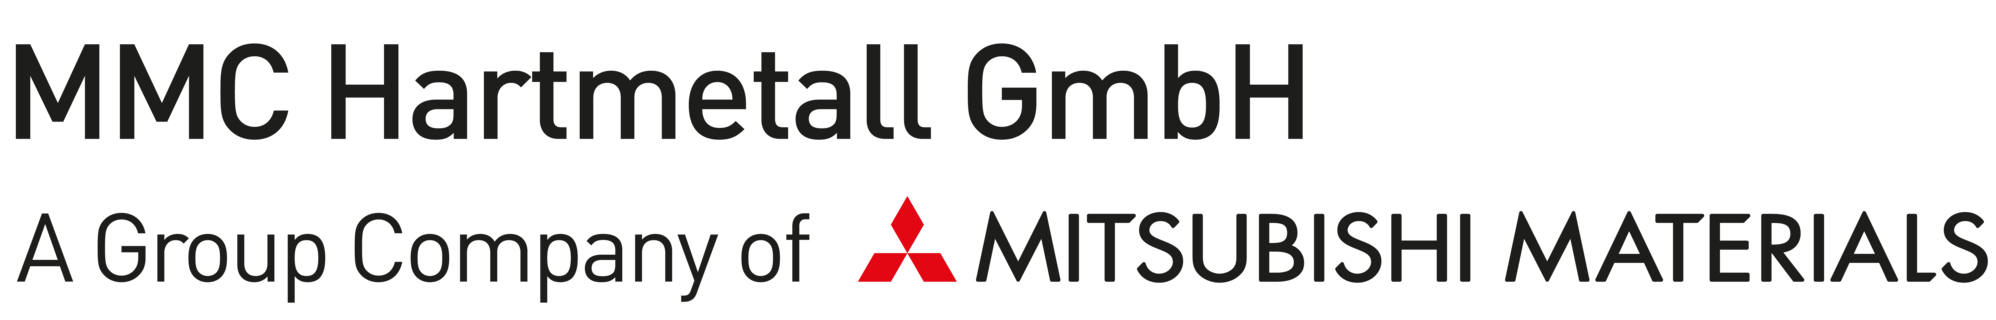 MMC Hartmetall GmbH Logo 